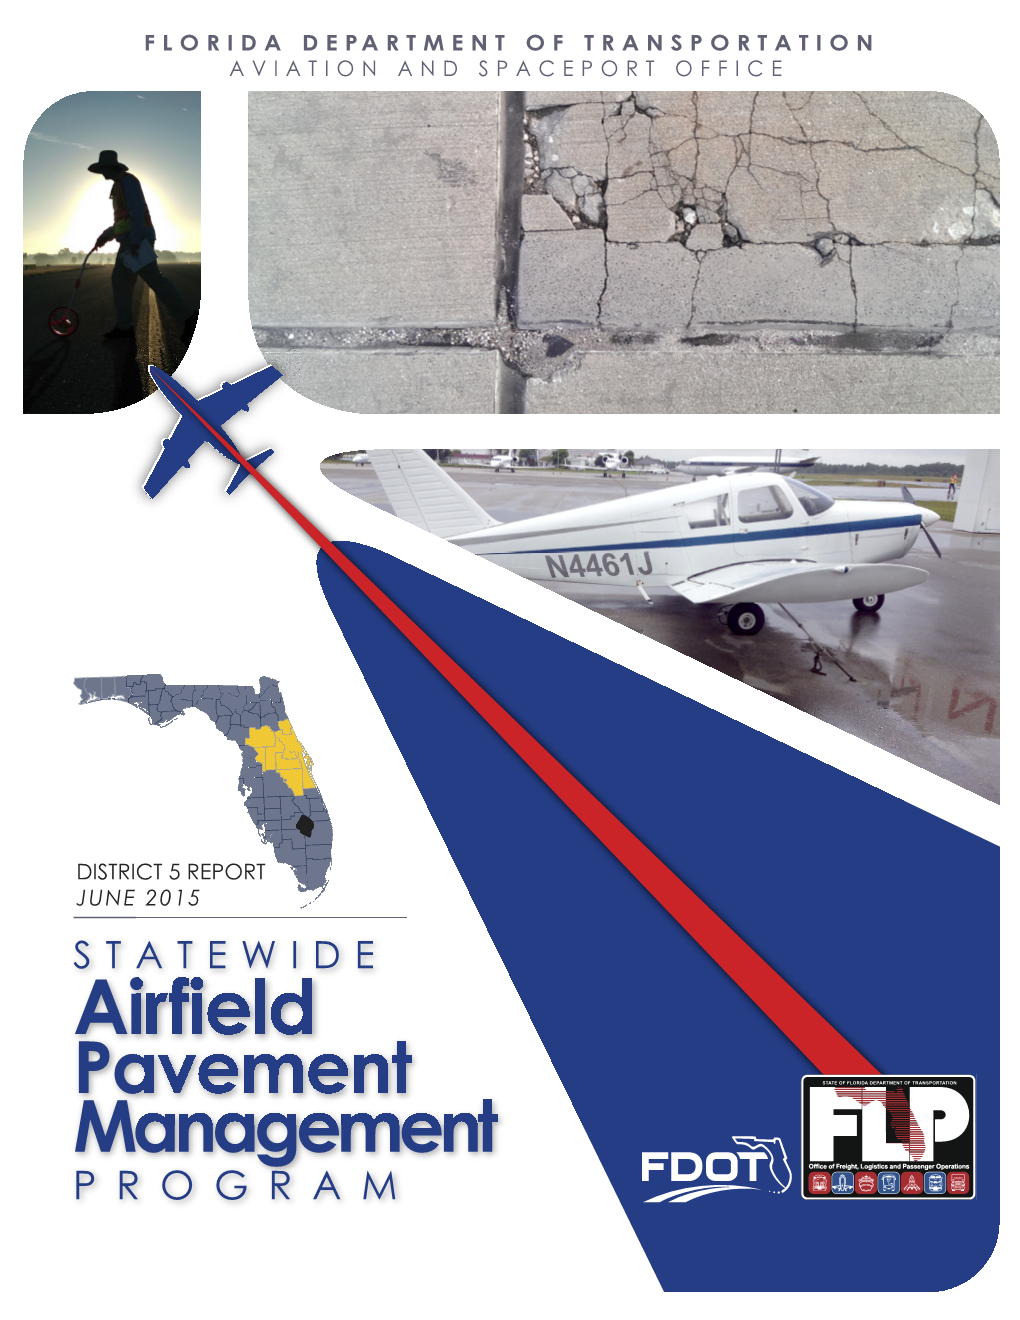 Airfield Pavement Management PROGRAM